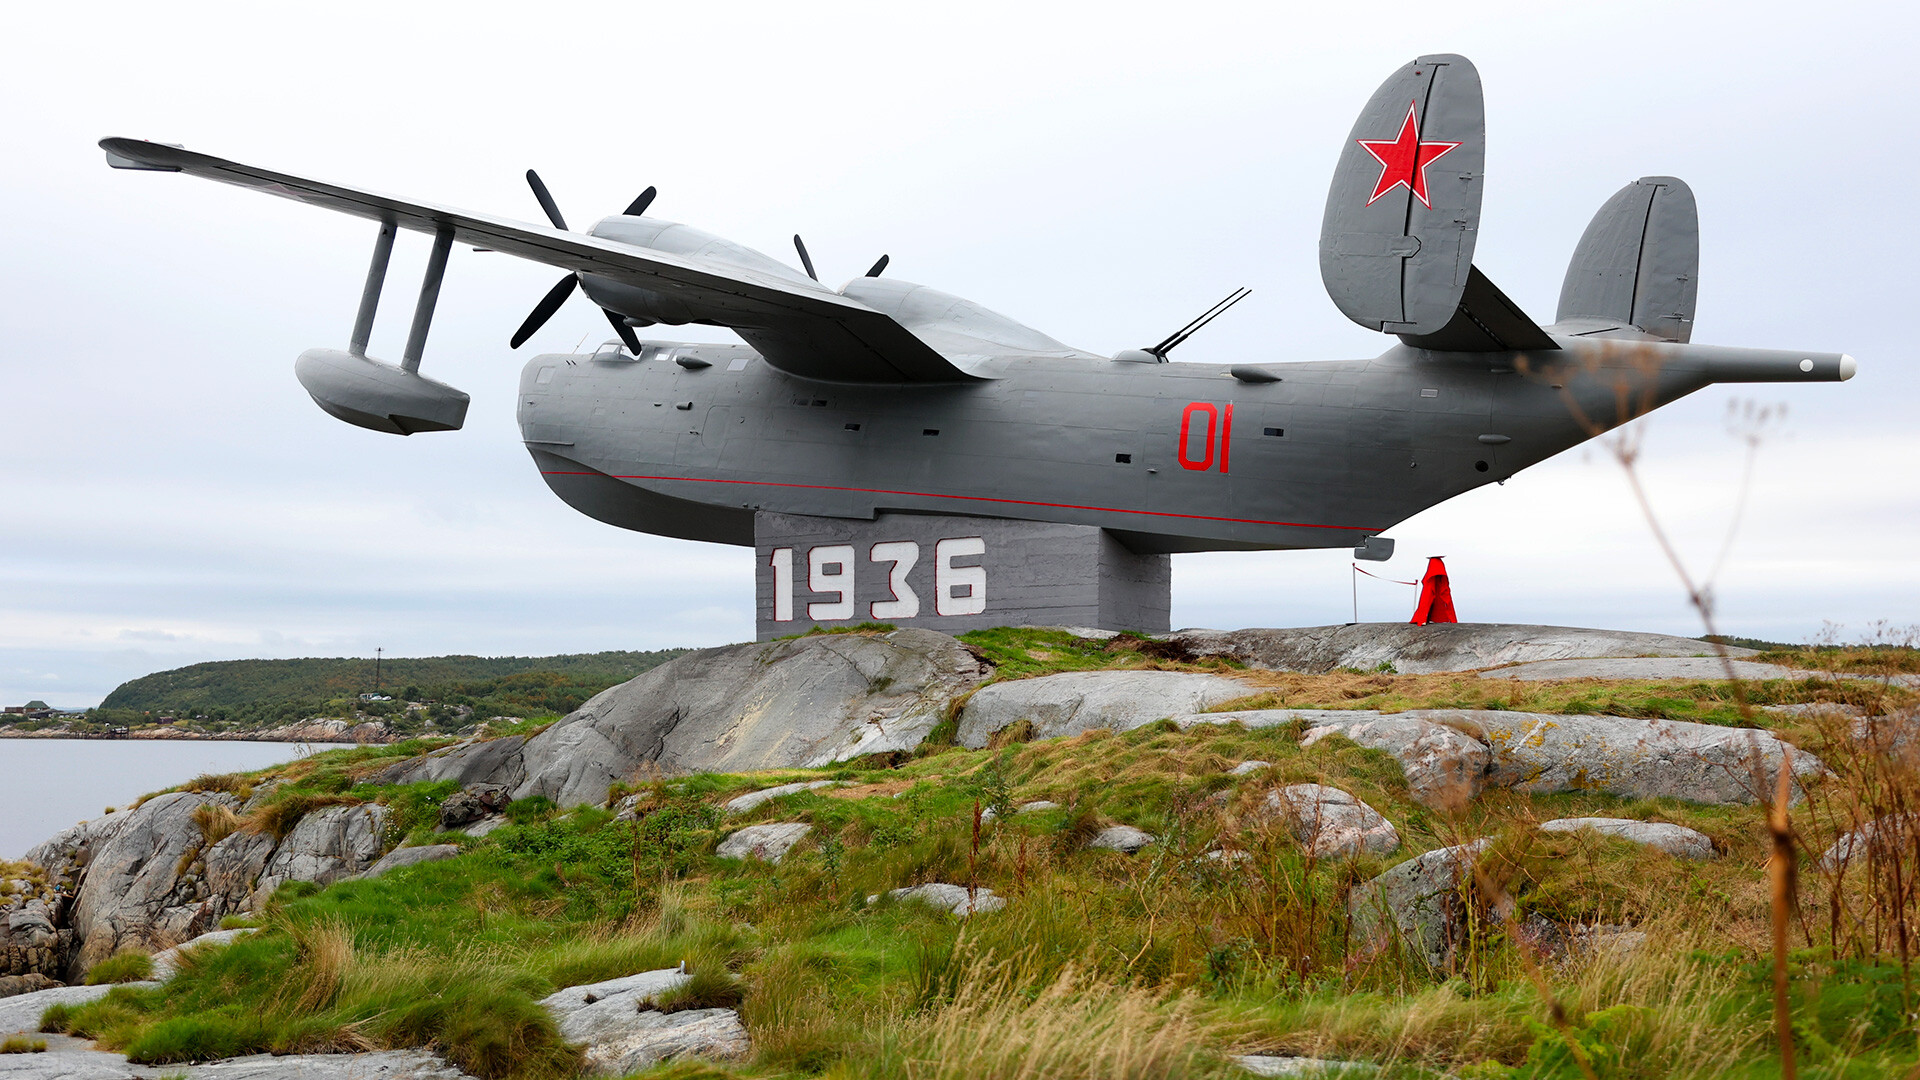 Monumen pesawat amfibi Be-6 di Teluk Kola, Murmanskaya Oblast. Tulisan 1936 di alas monumen tersebut menunjukkan tahun berdirinya Angkatan Udara Armada Utara.